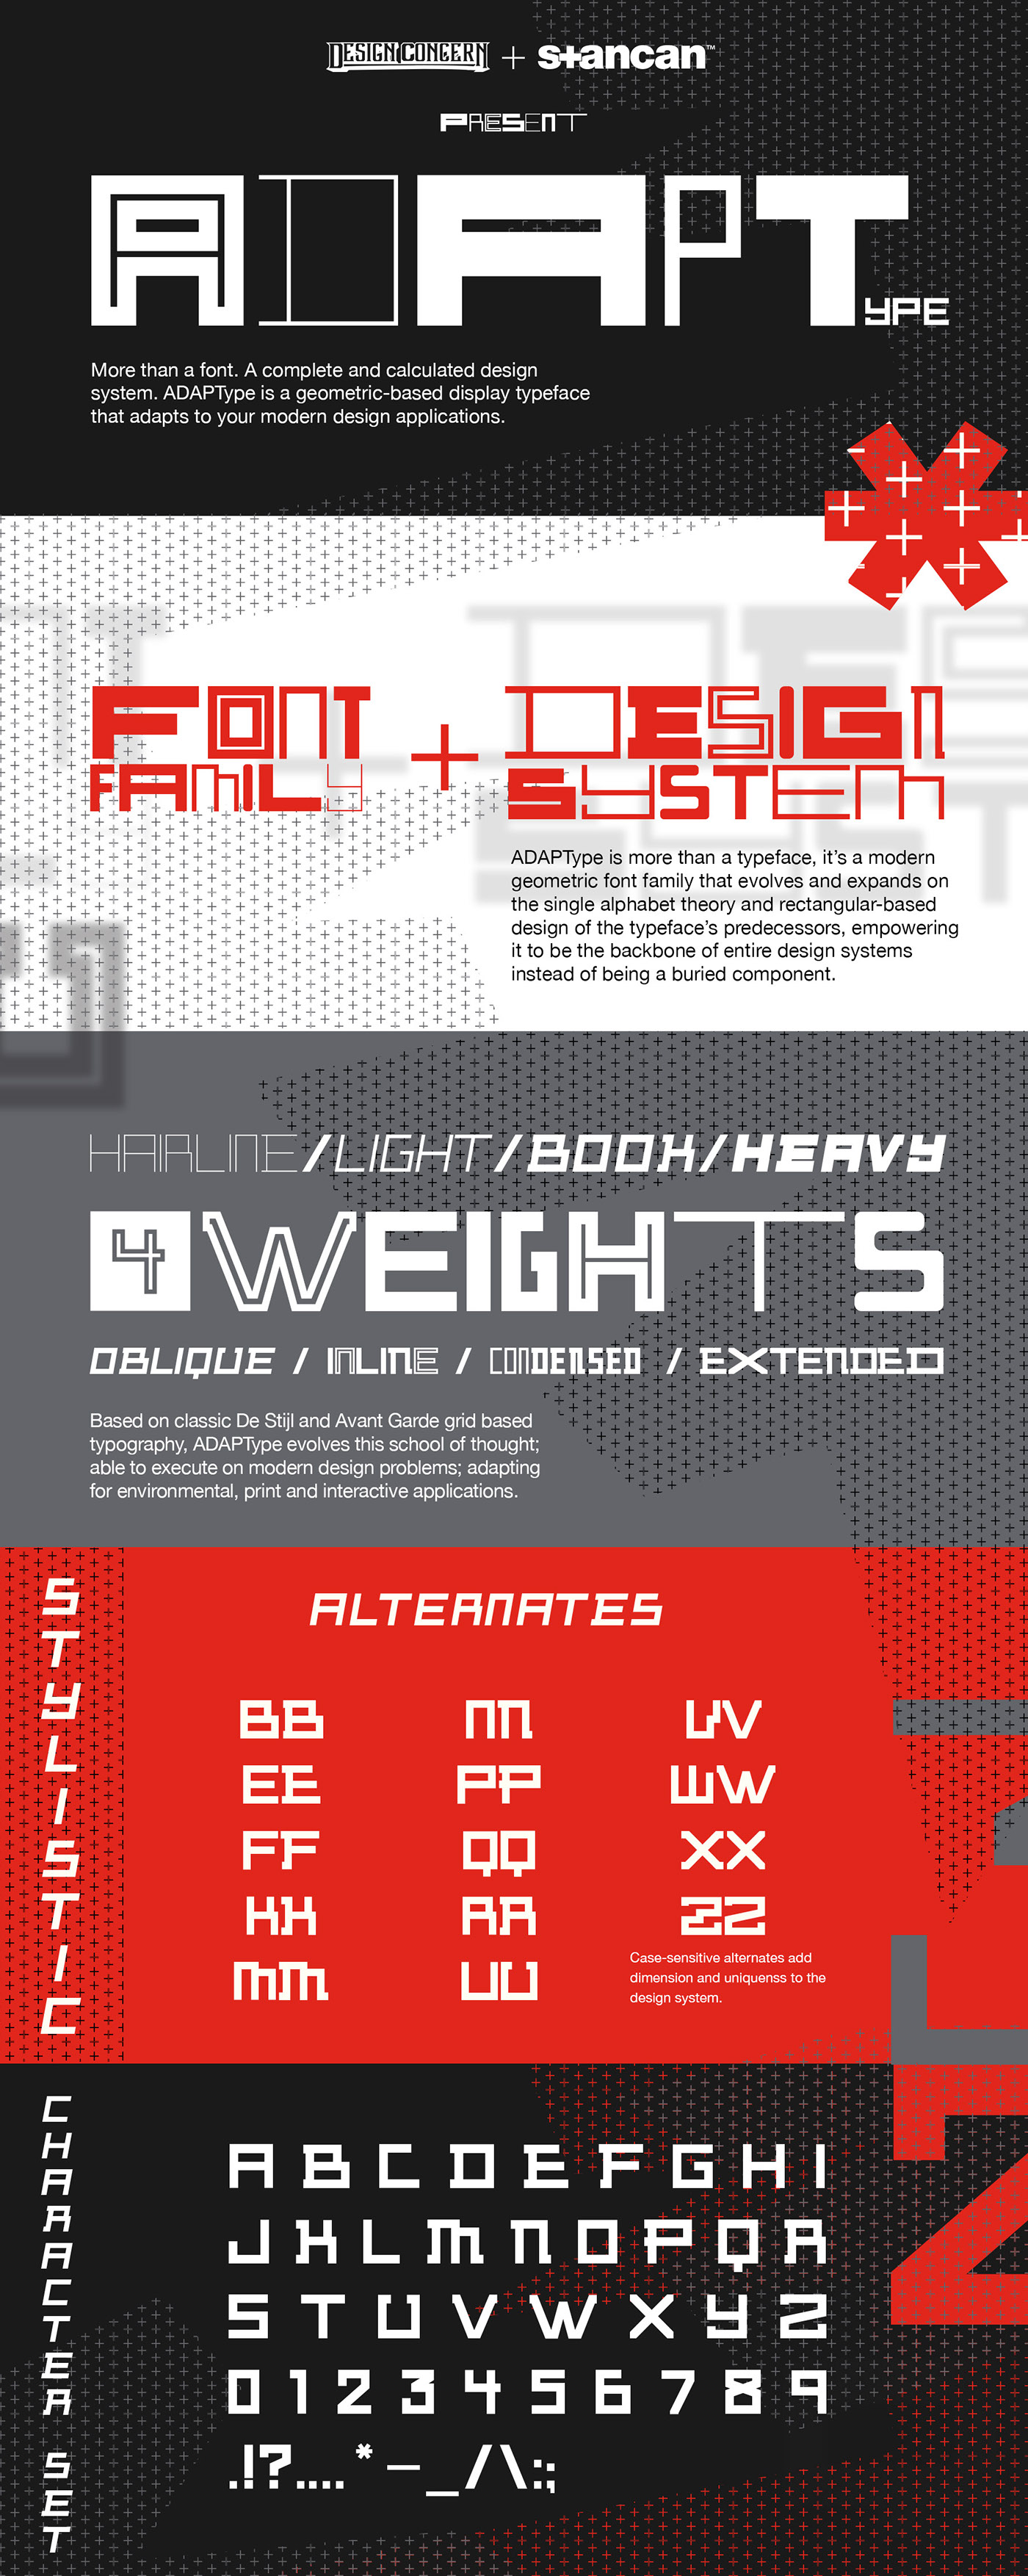 Typeface font Website brand visual identity logo Logo Design poster